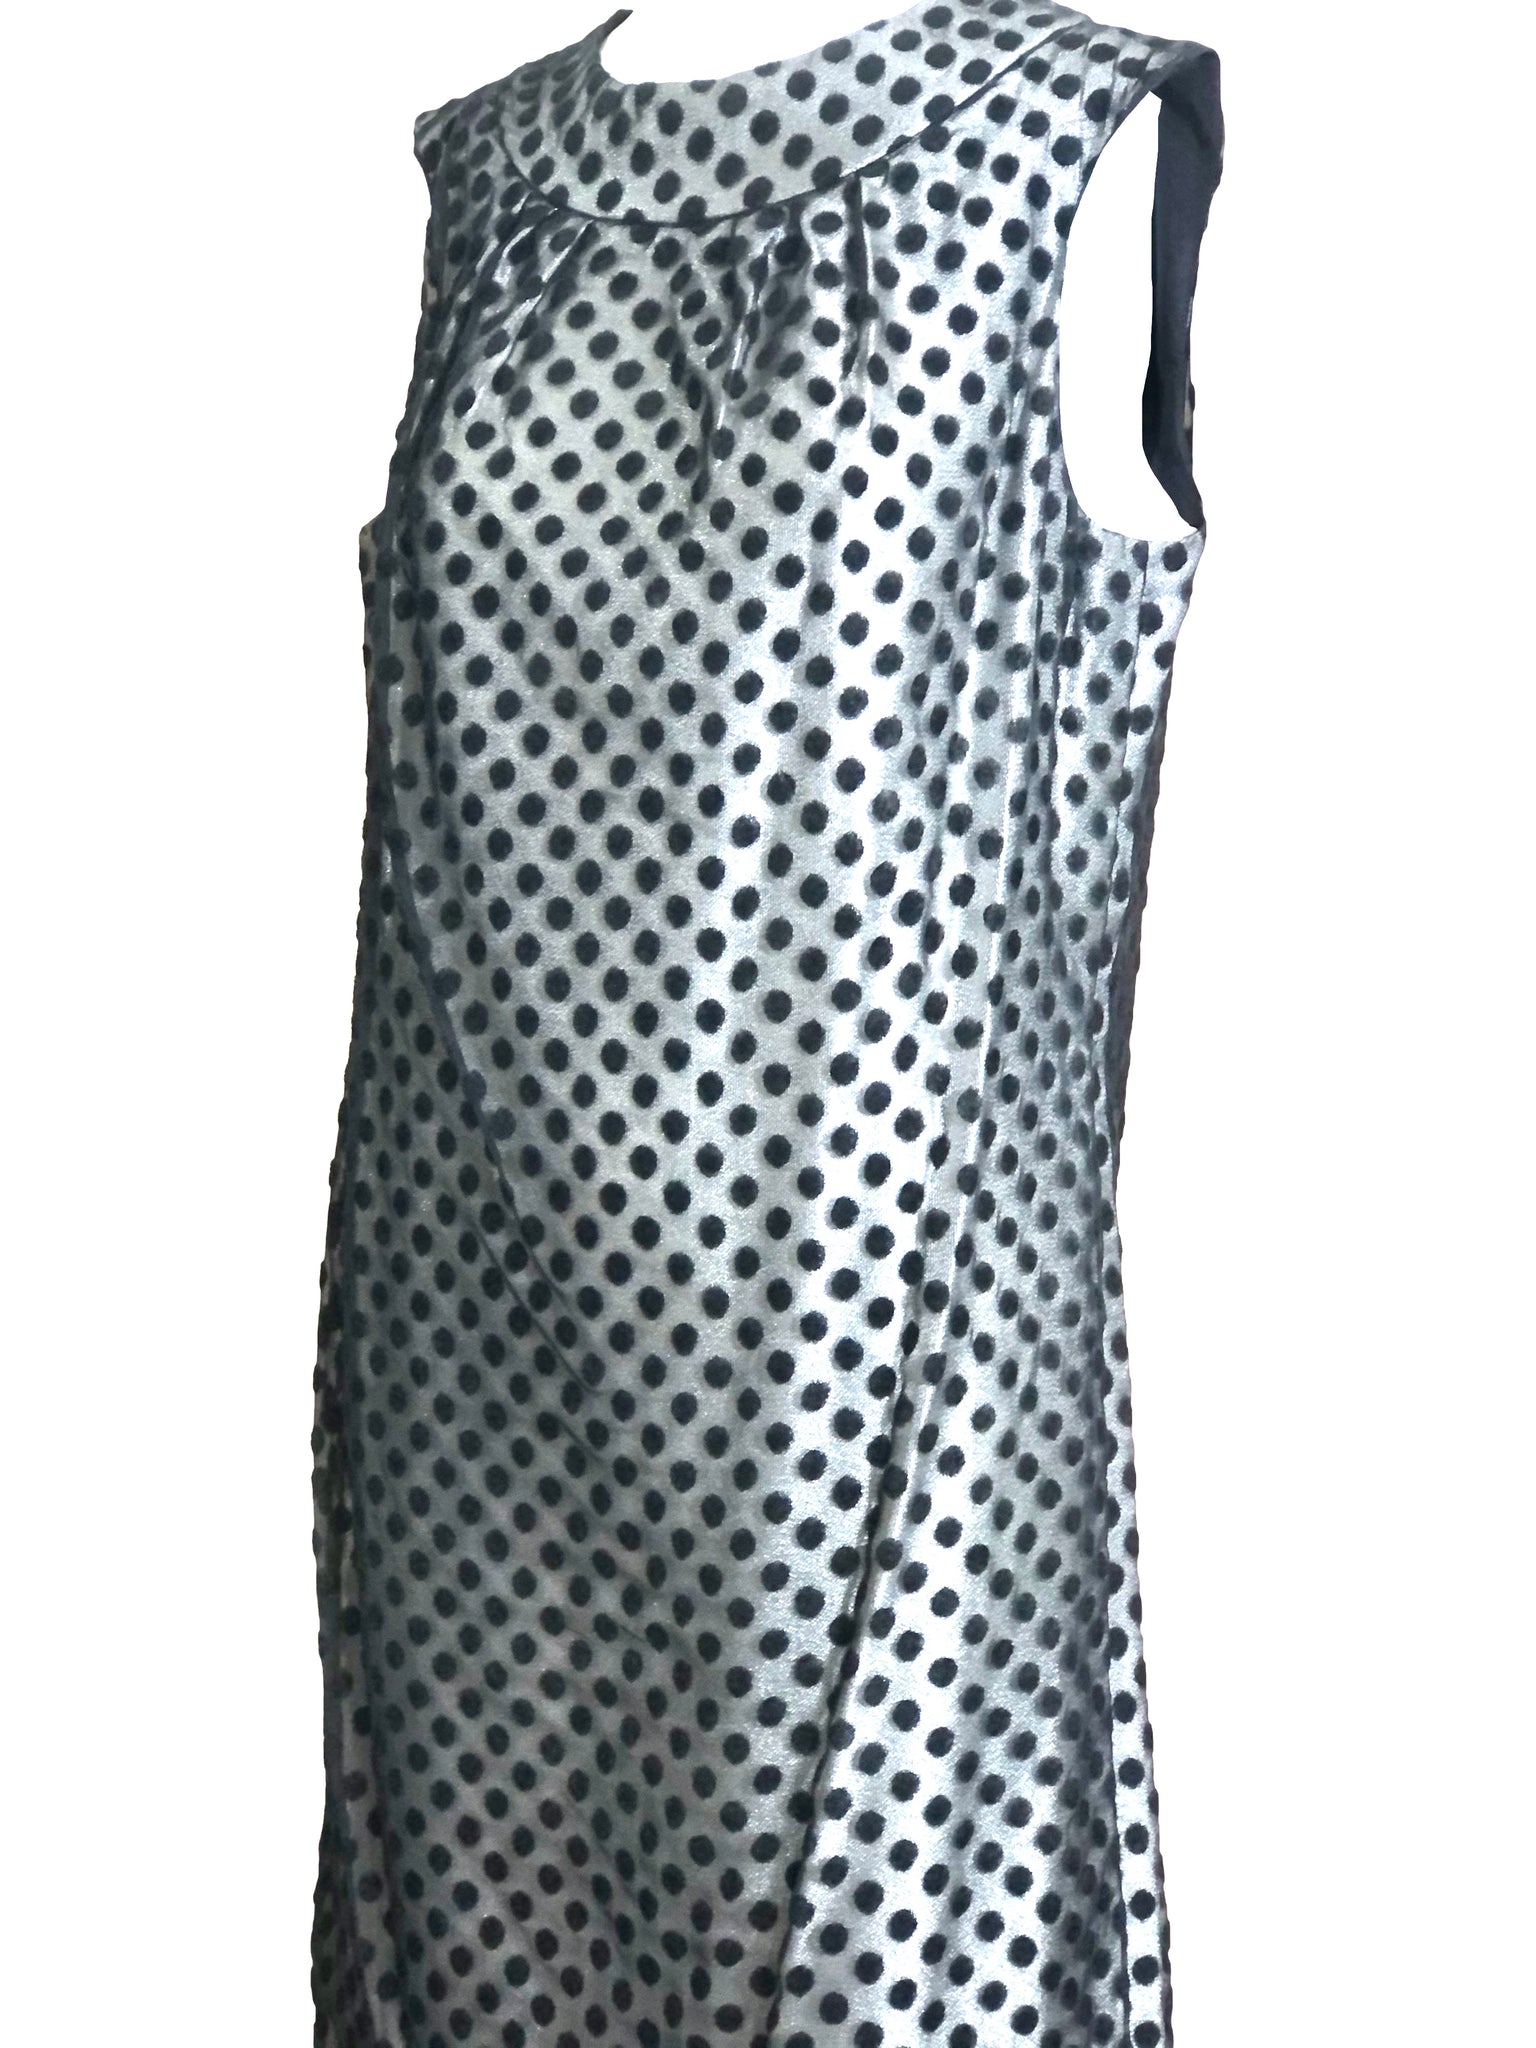 60s Dress Black Polka Dot Over Silver Lurex sheath DETAIL 4 of 6